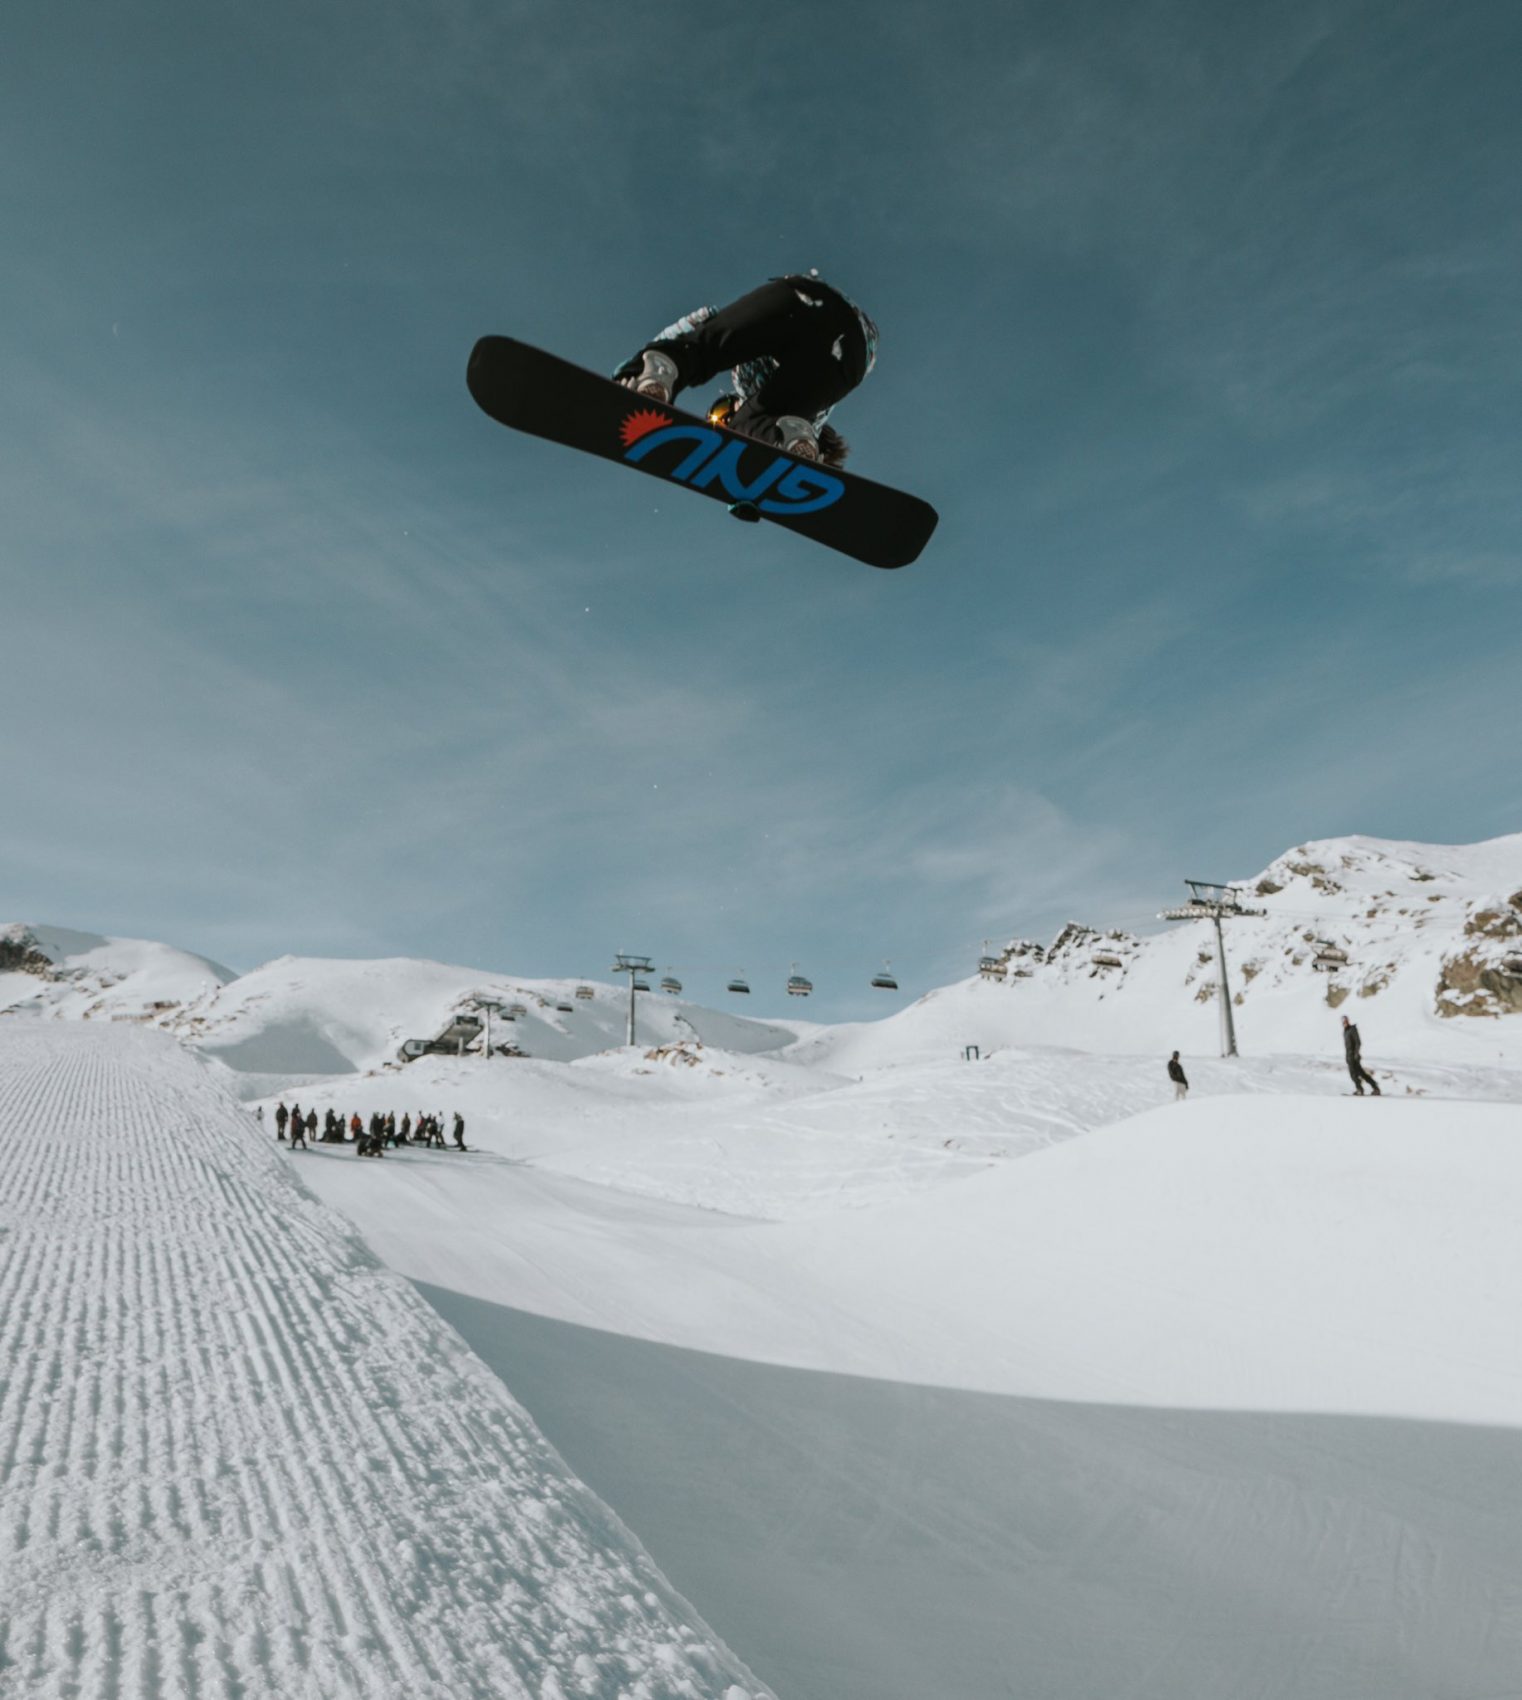 arielle gold snowboarding